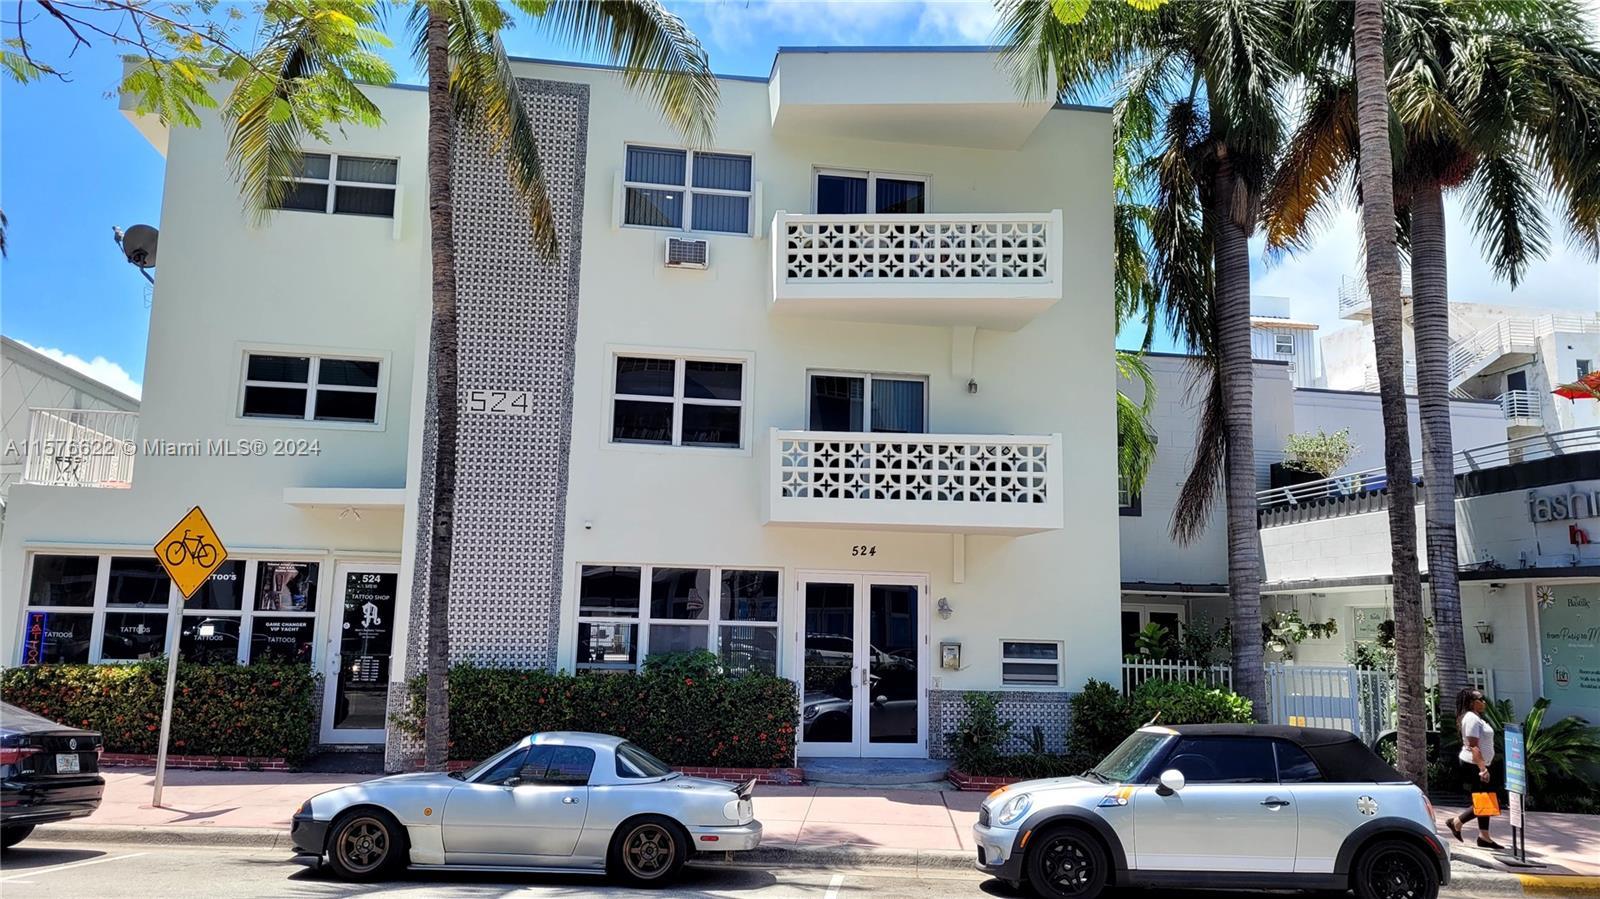 Photo of 524 Washington Ave #213 in Miami Beach, FL